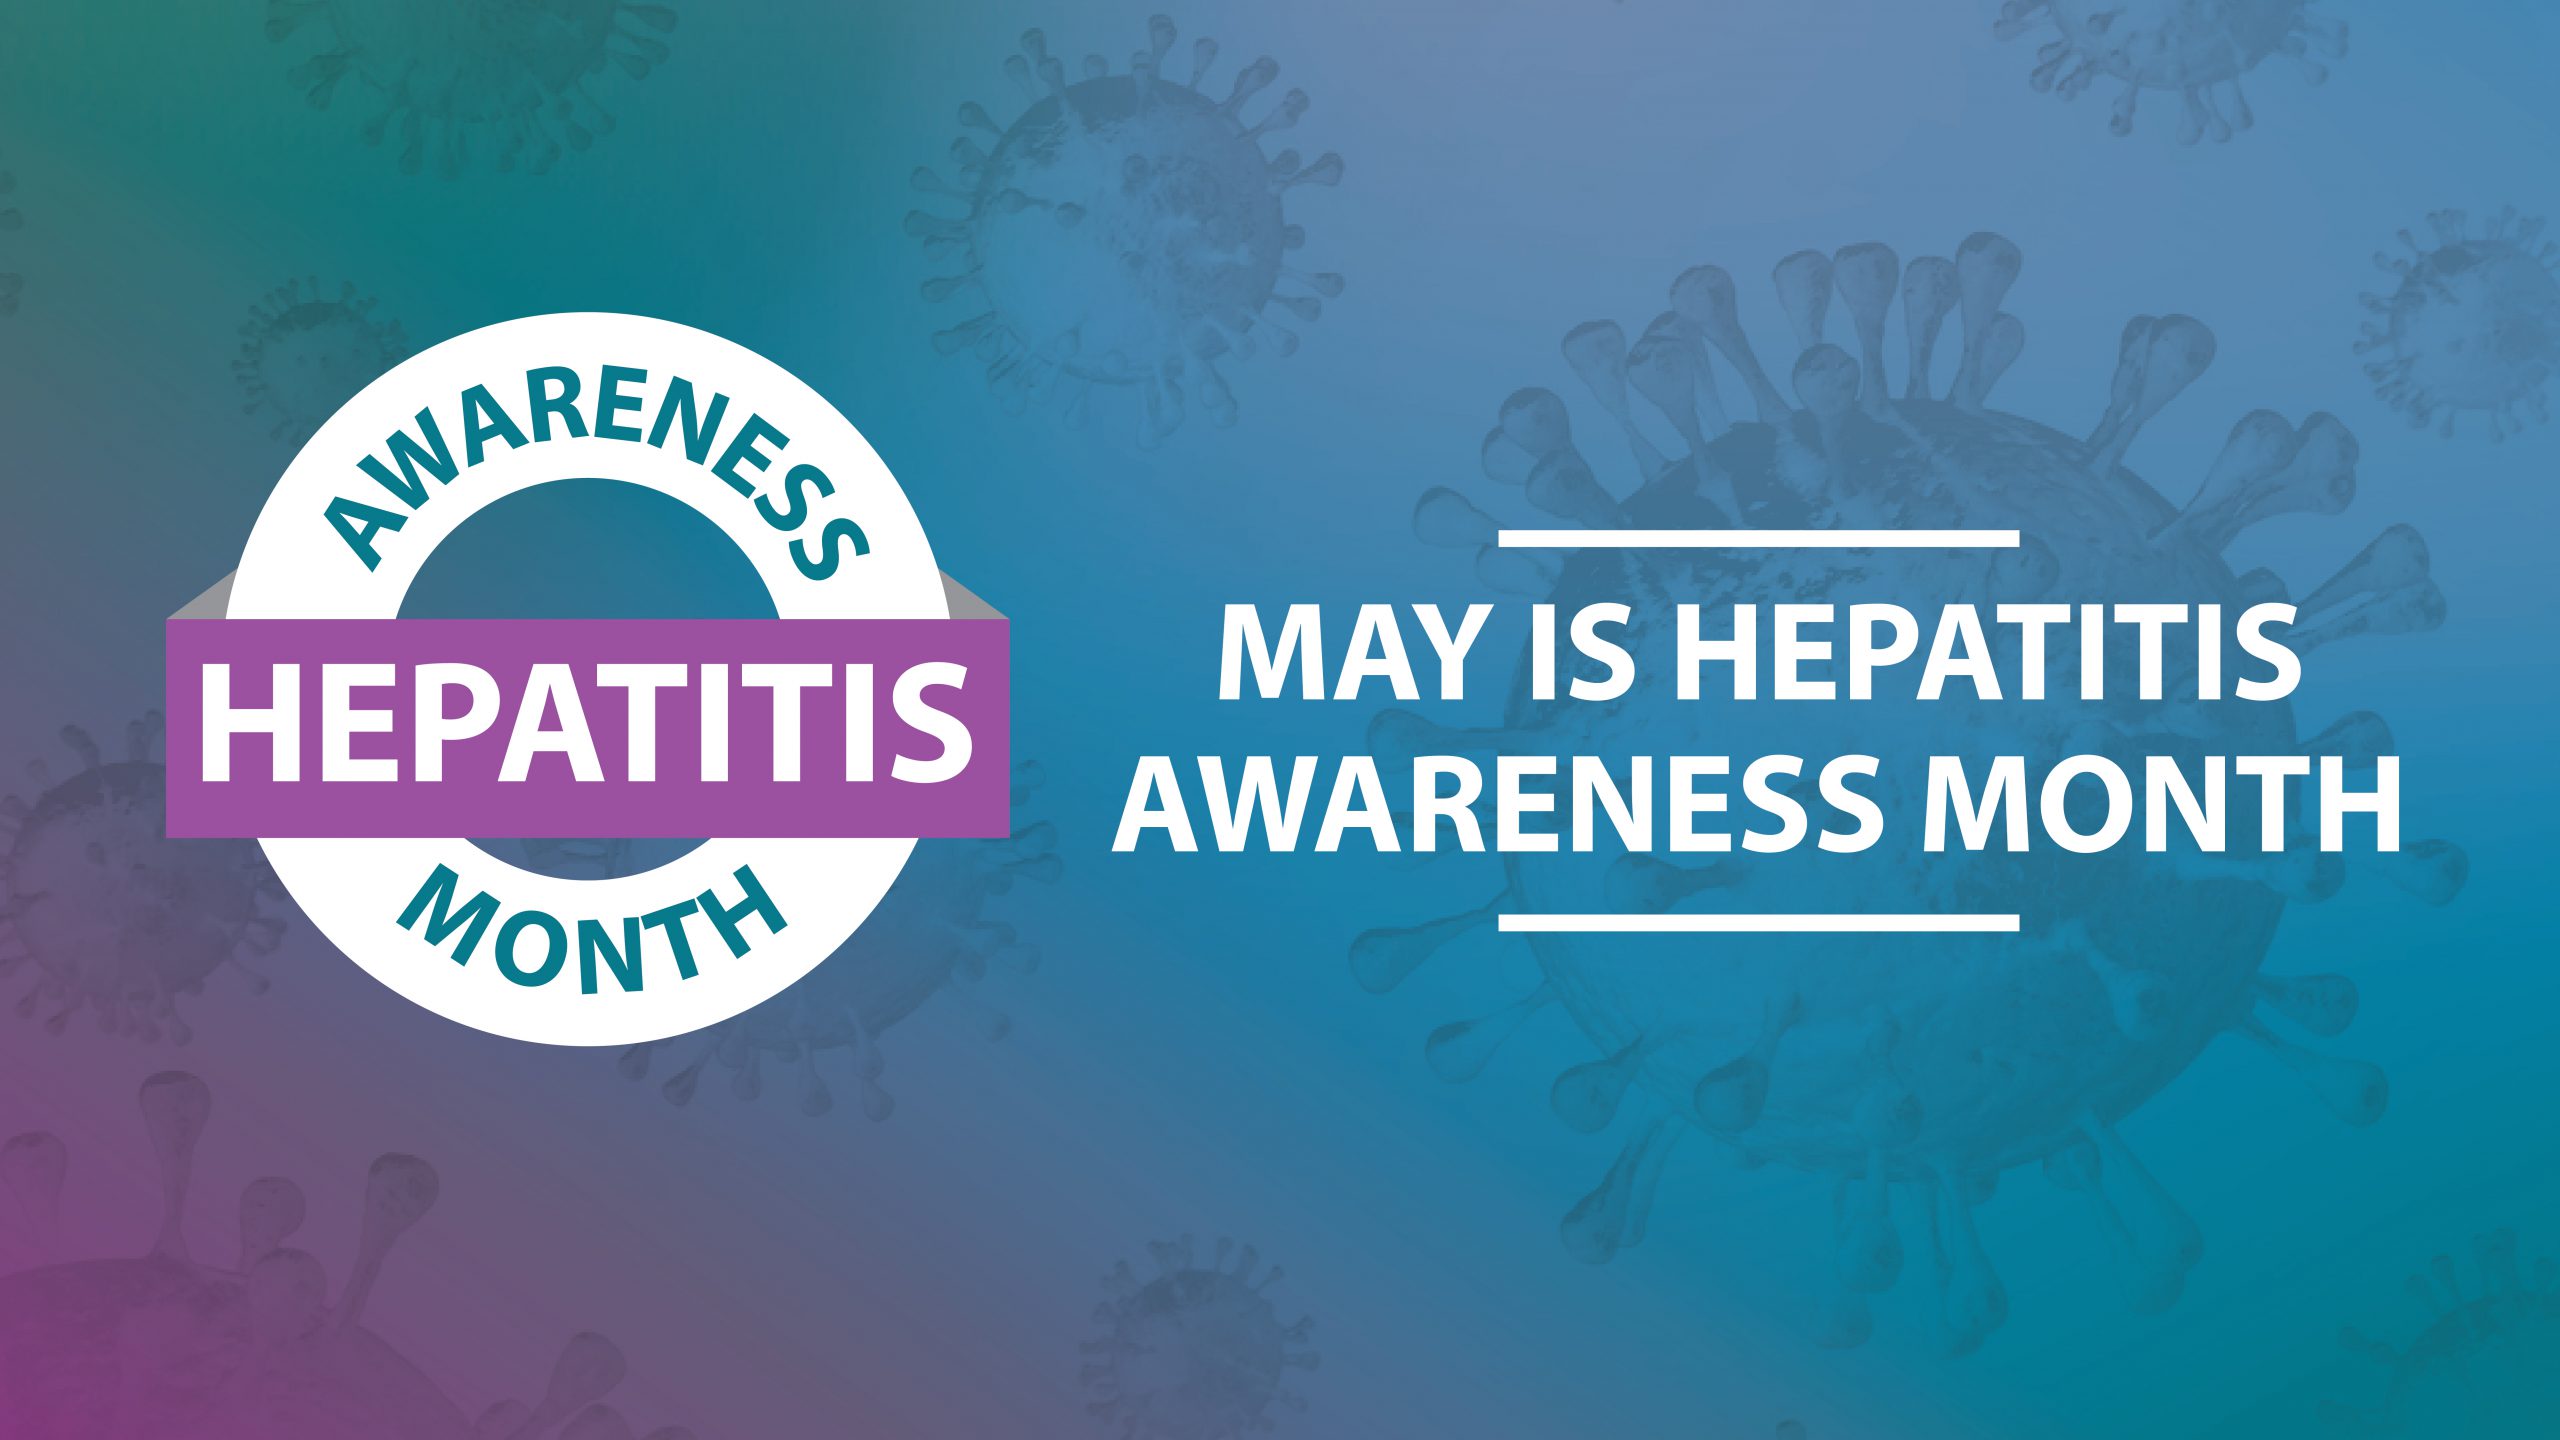 Display screen illustrating that May is hepatitis awareness month